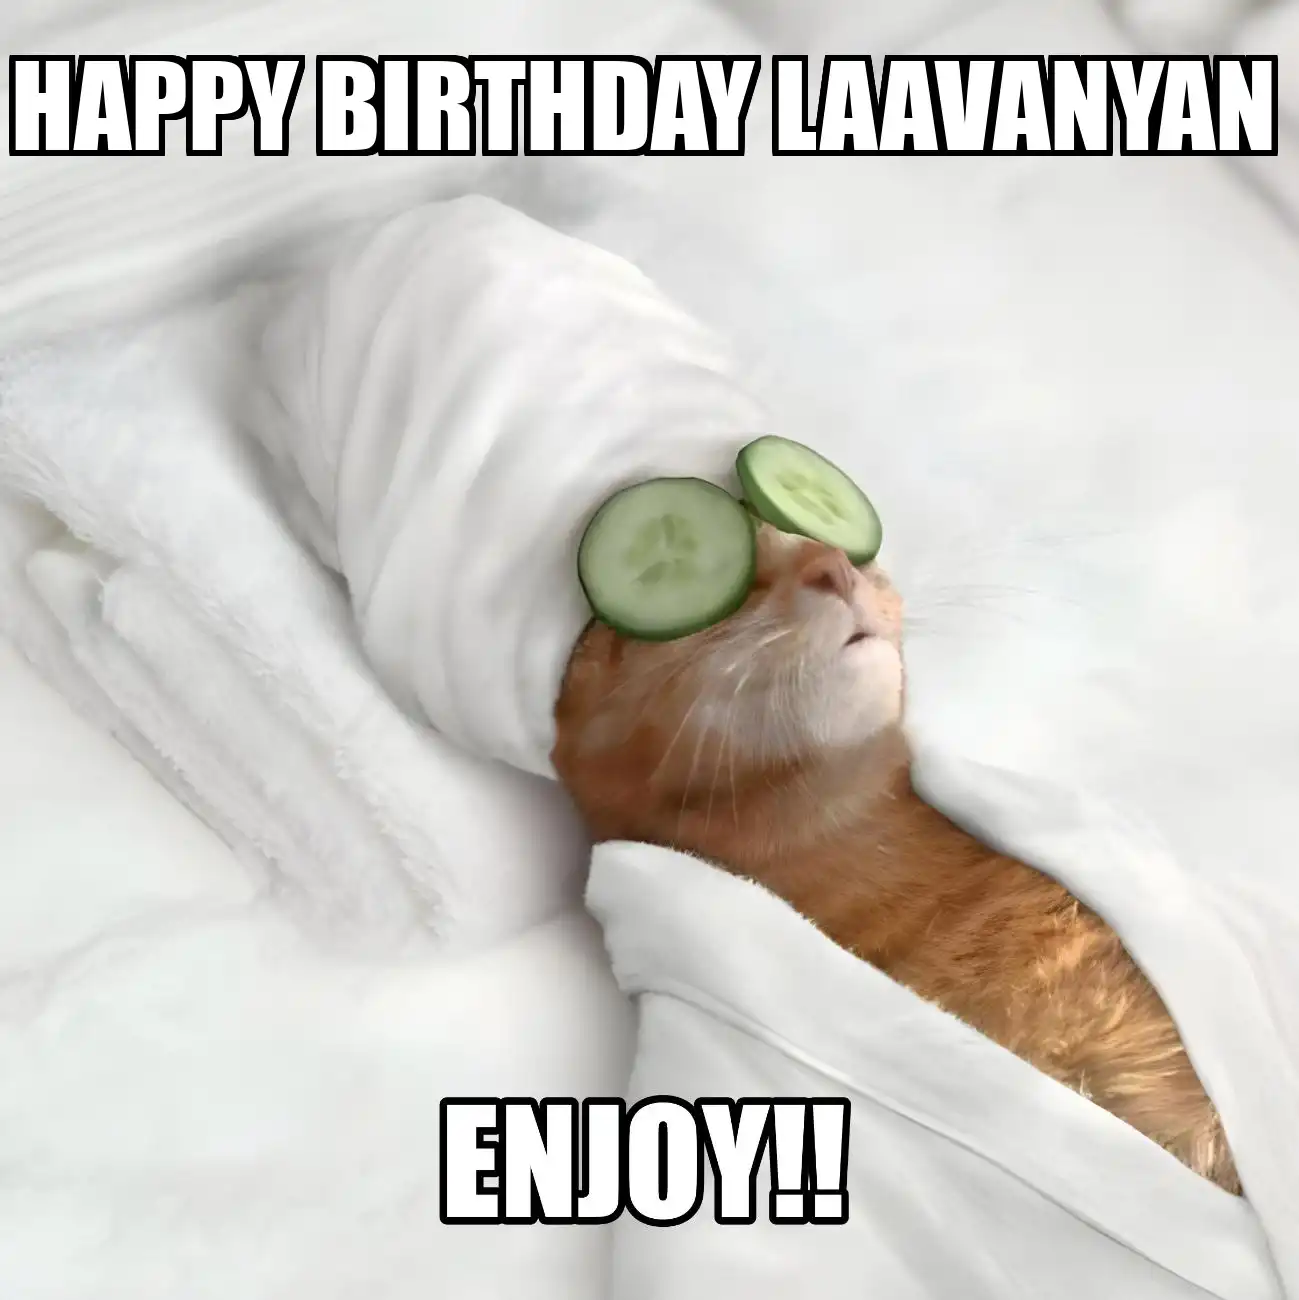 Happy Birthday Laavanyan Enjoy Cat Meme